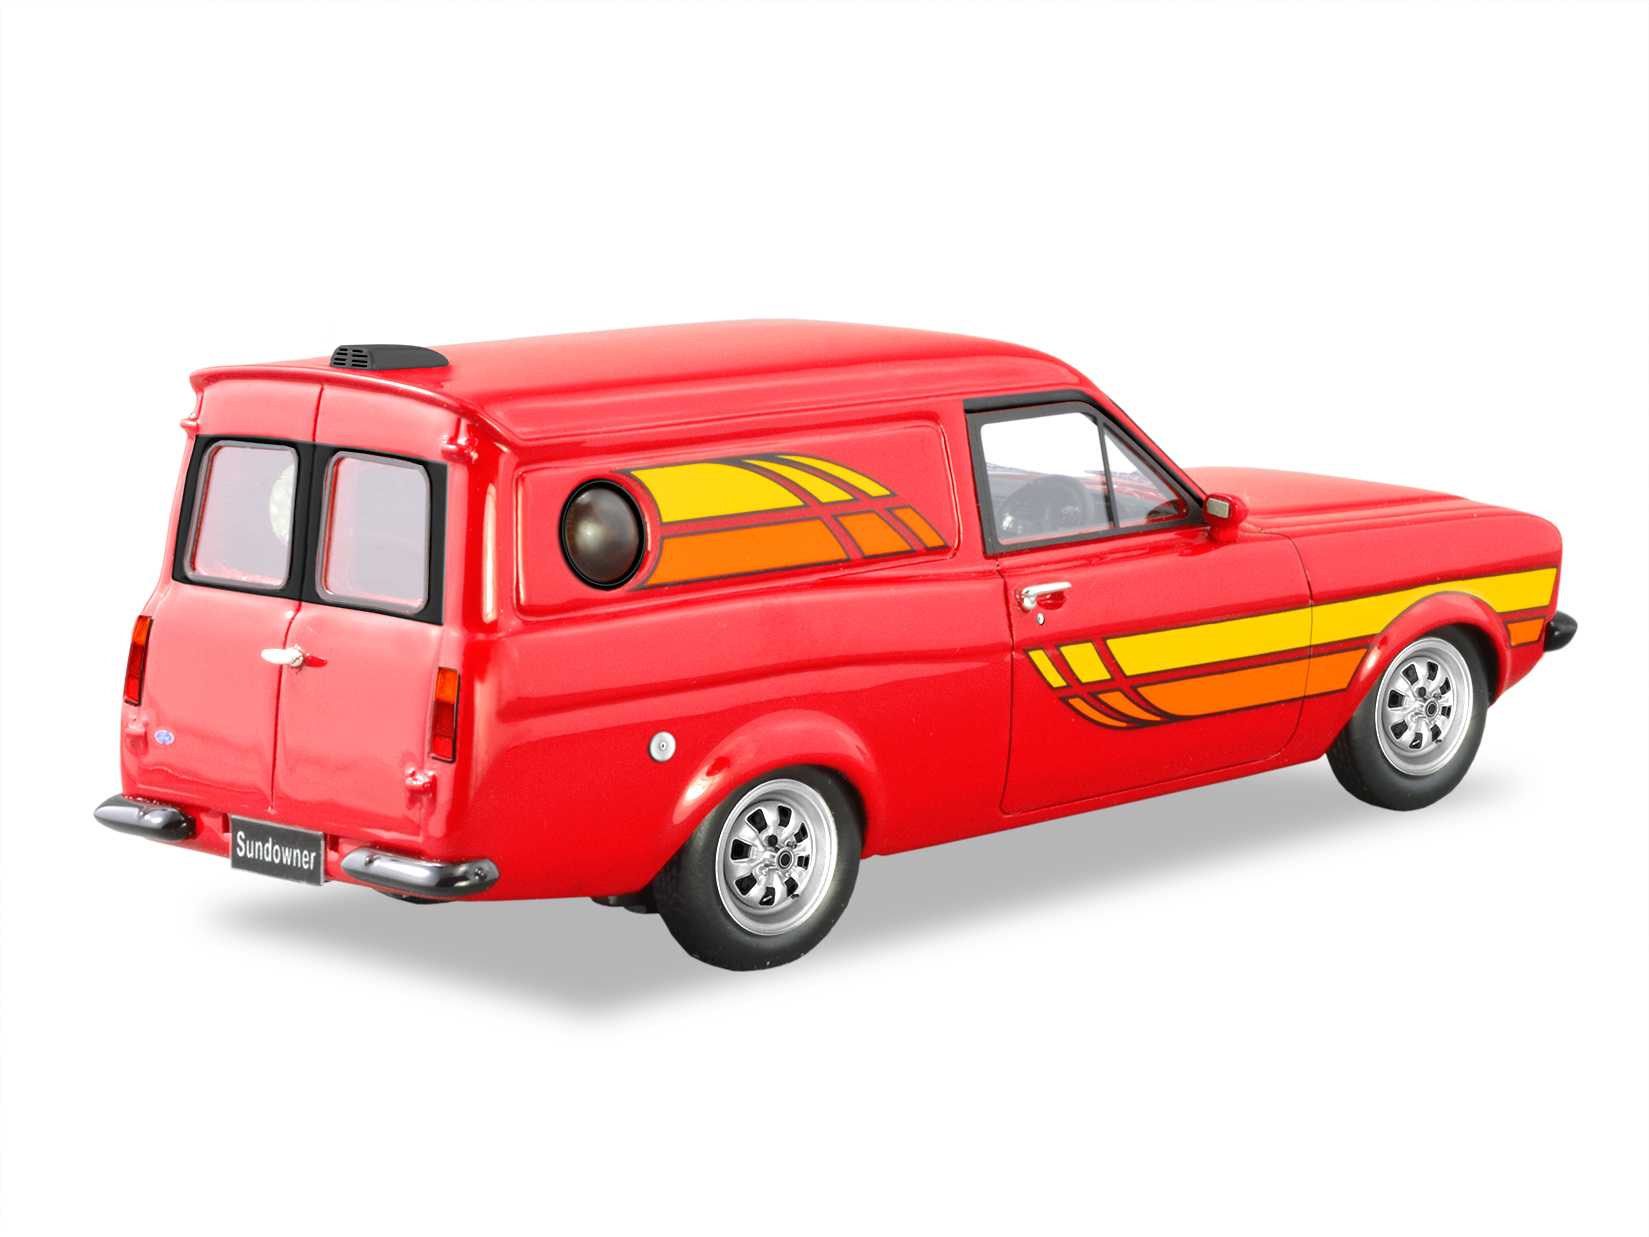 1978 Ford Escort Sundowner Panel Van – Red Flame